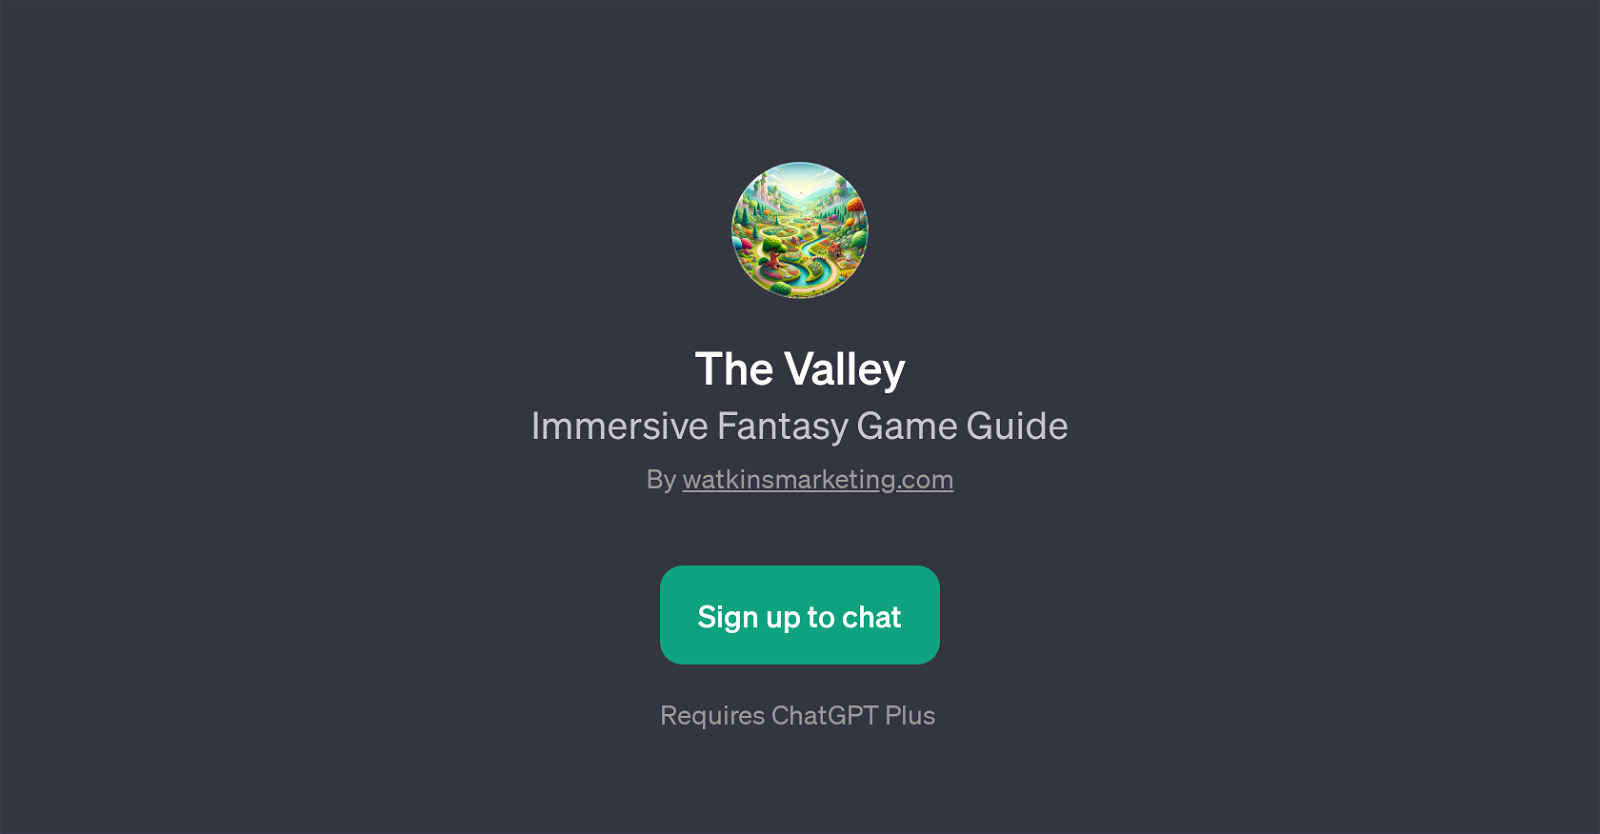 The Valley website